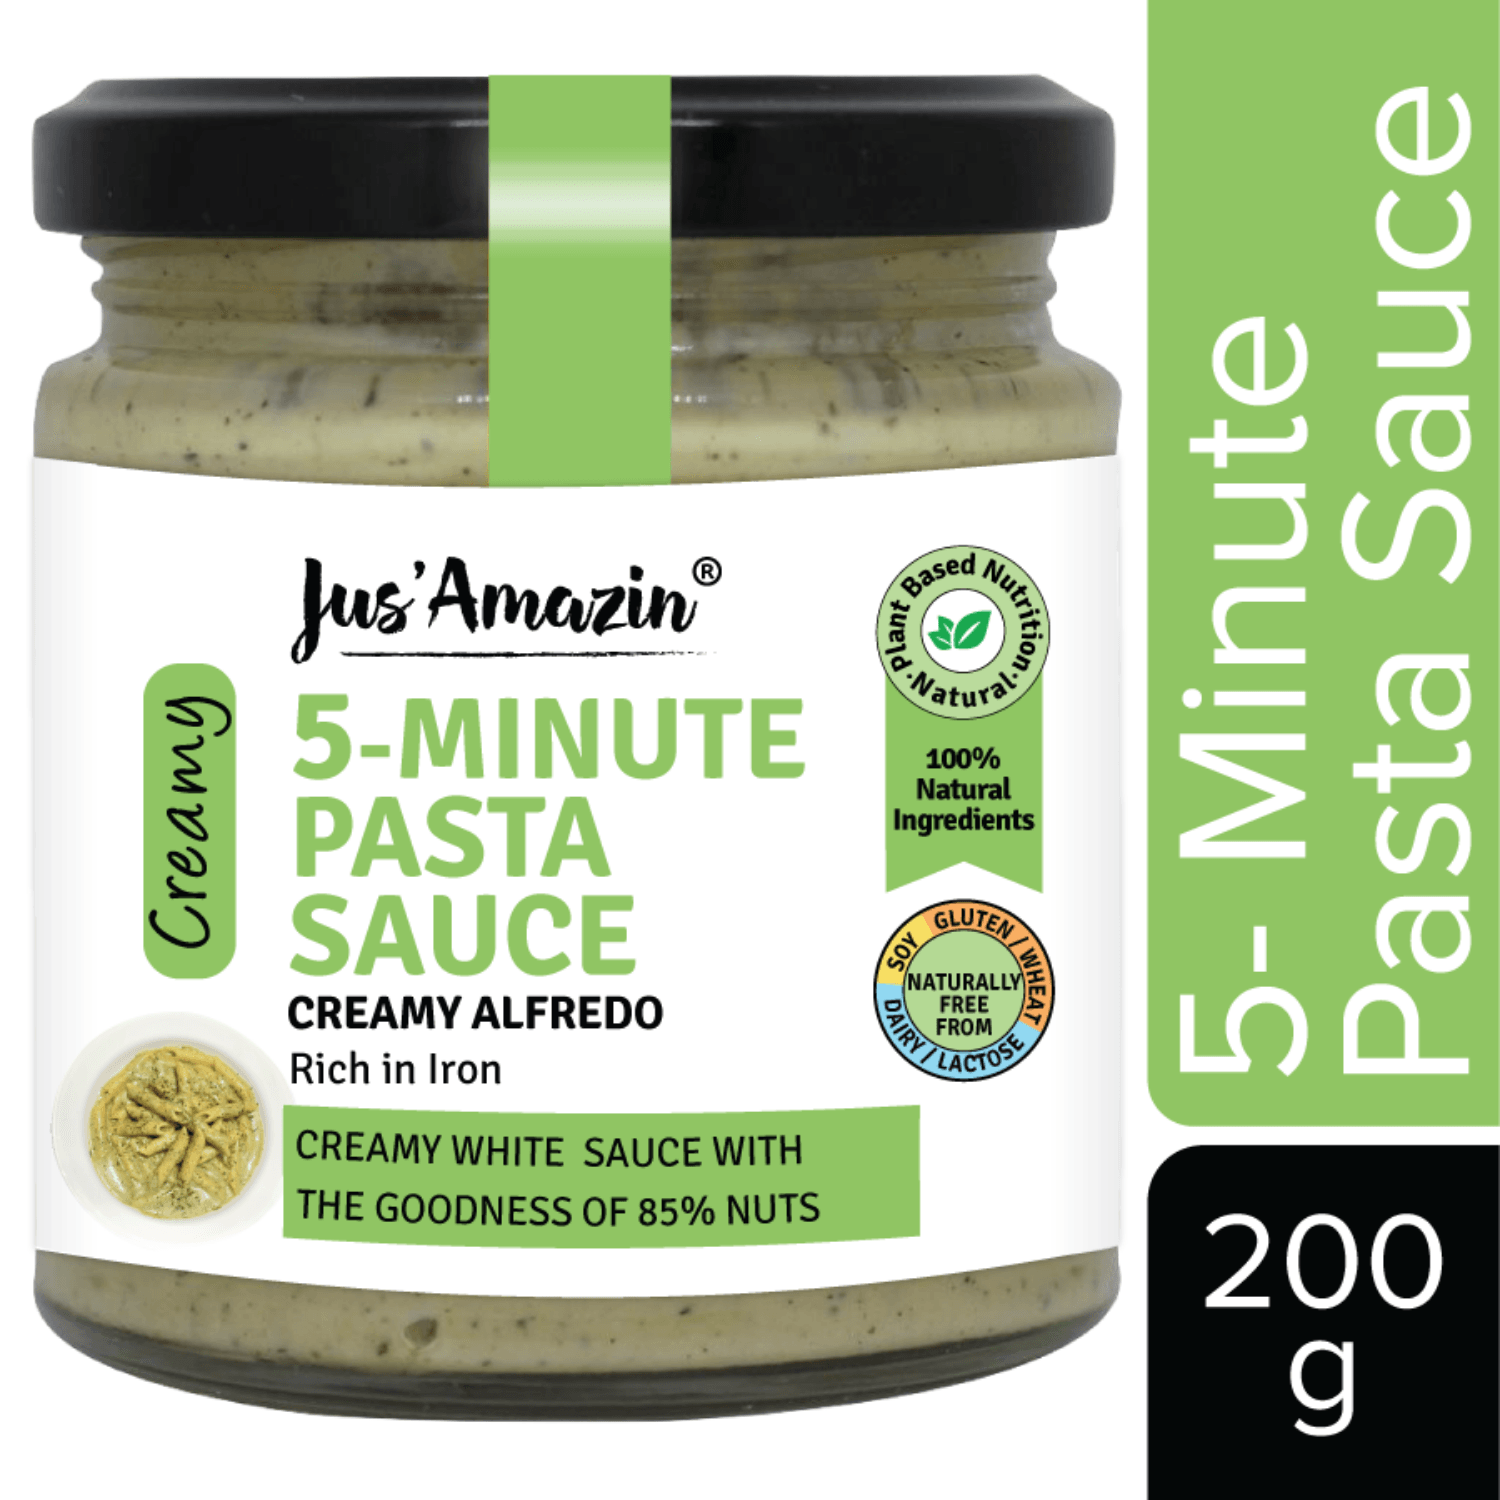 Jus Amazin 5-Minute Pasta Sauce - Creamy Alfredo (200g) - plant based Dukan